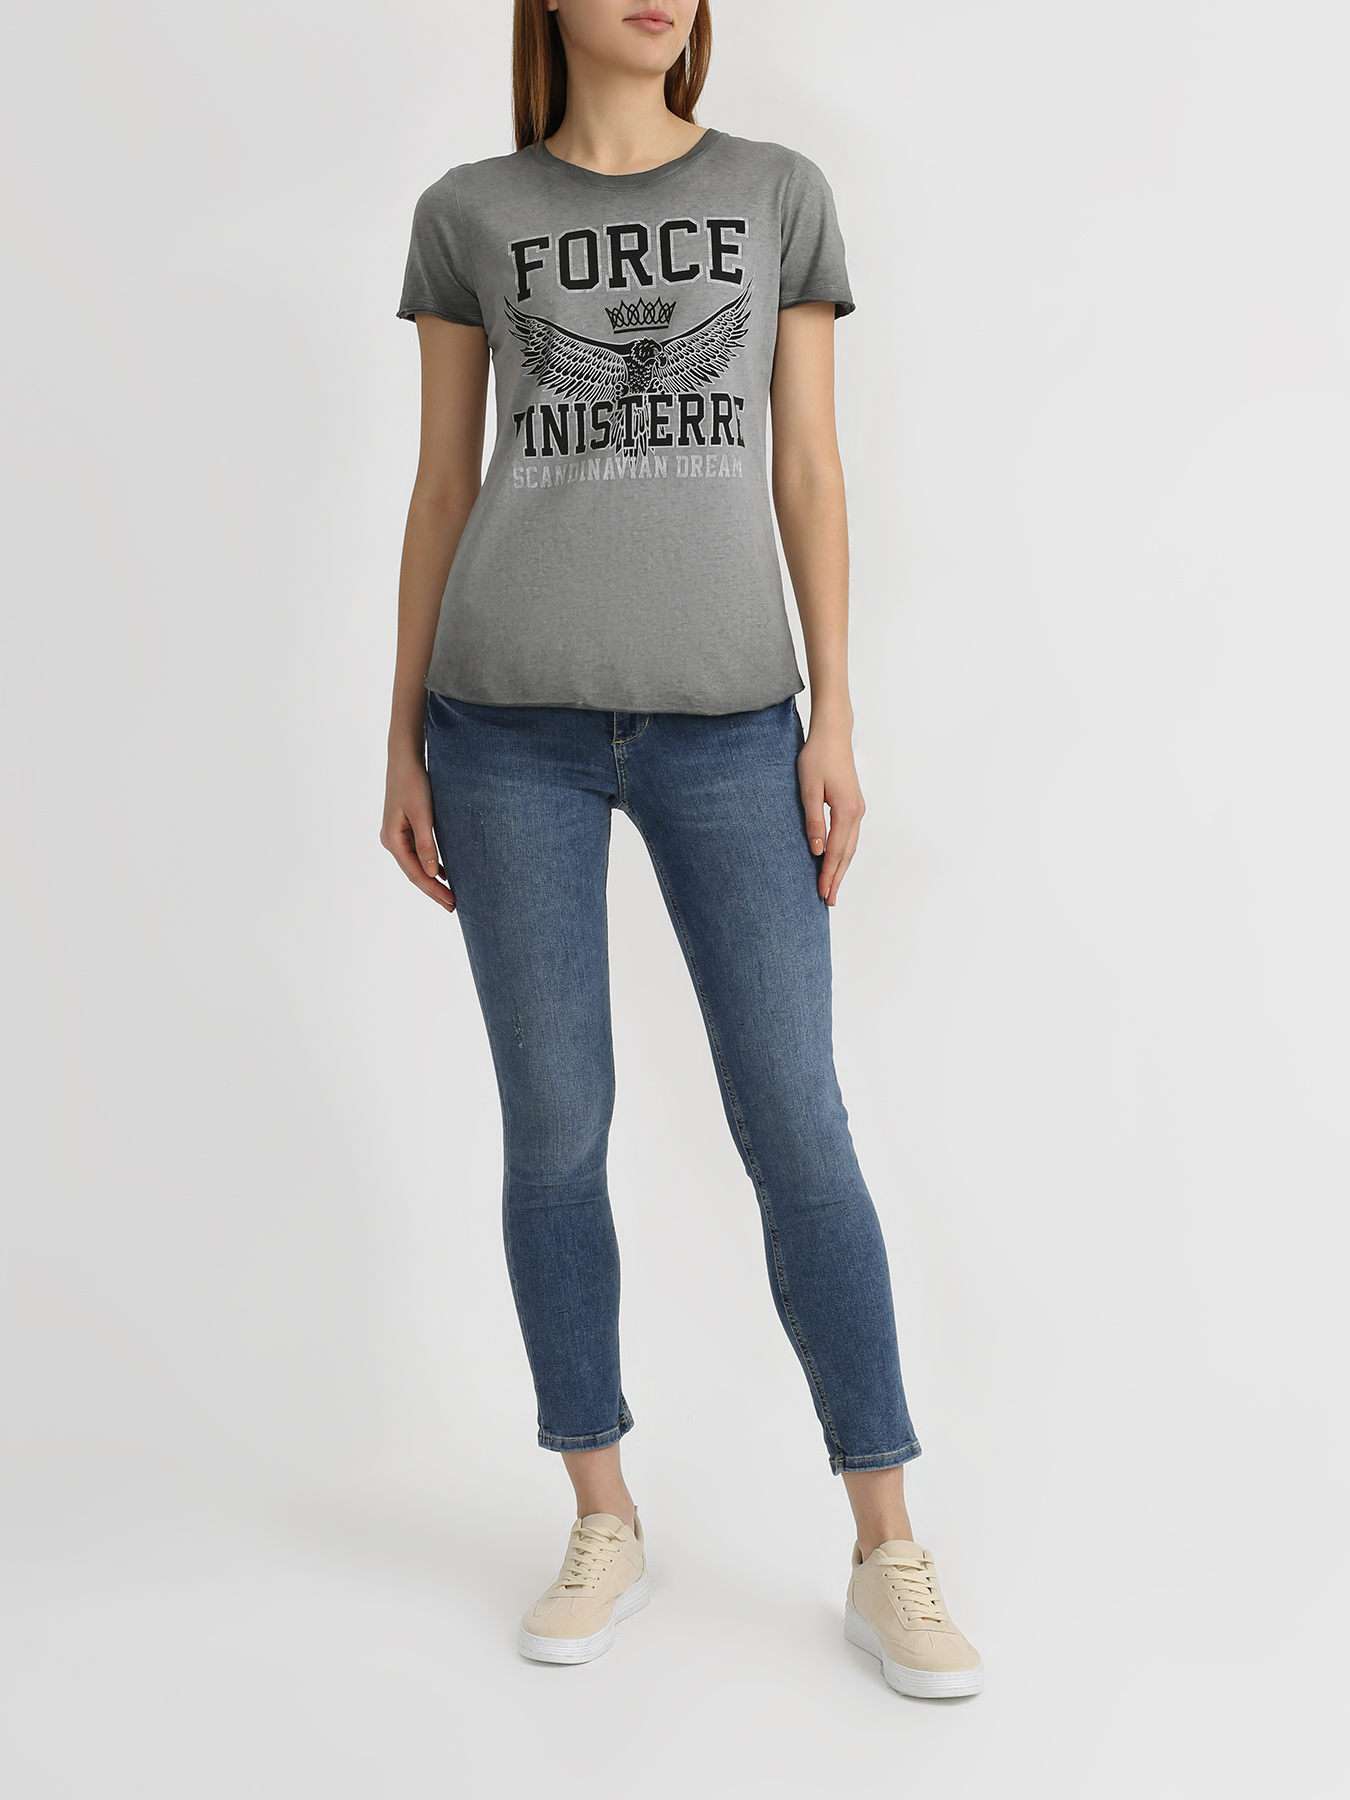 Finisterre Force Женская футболка 334266-023